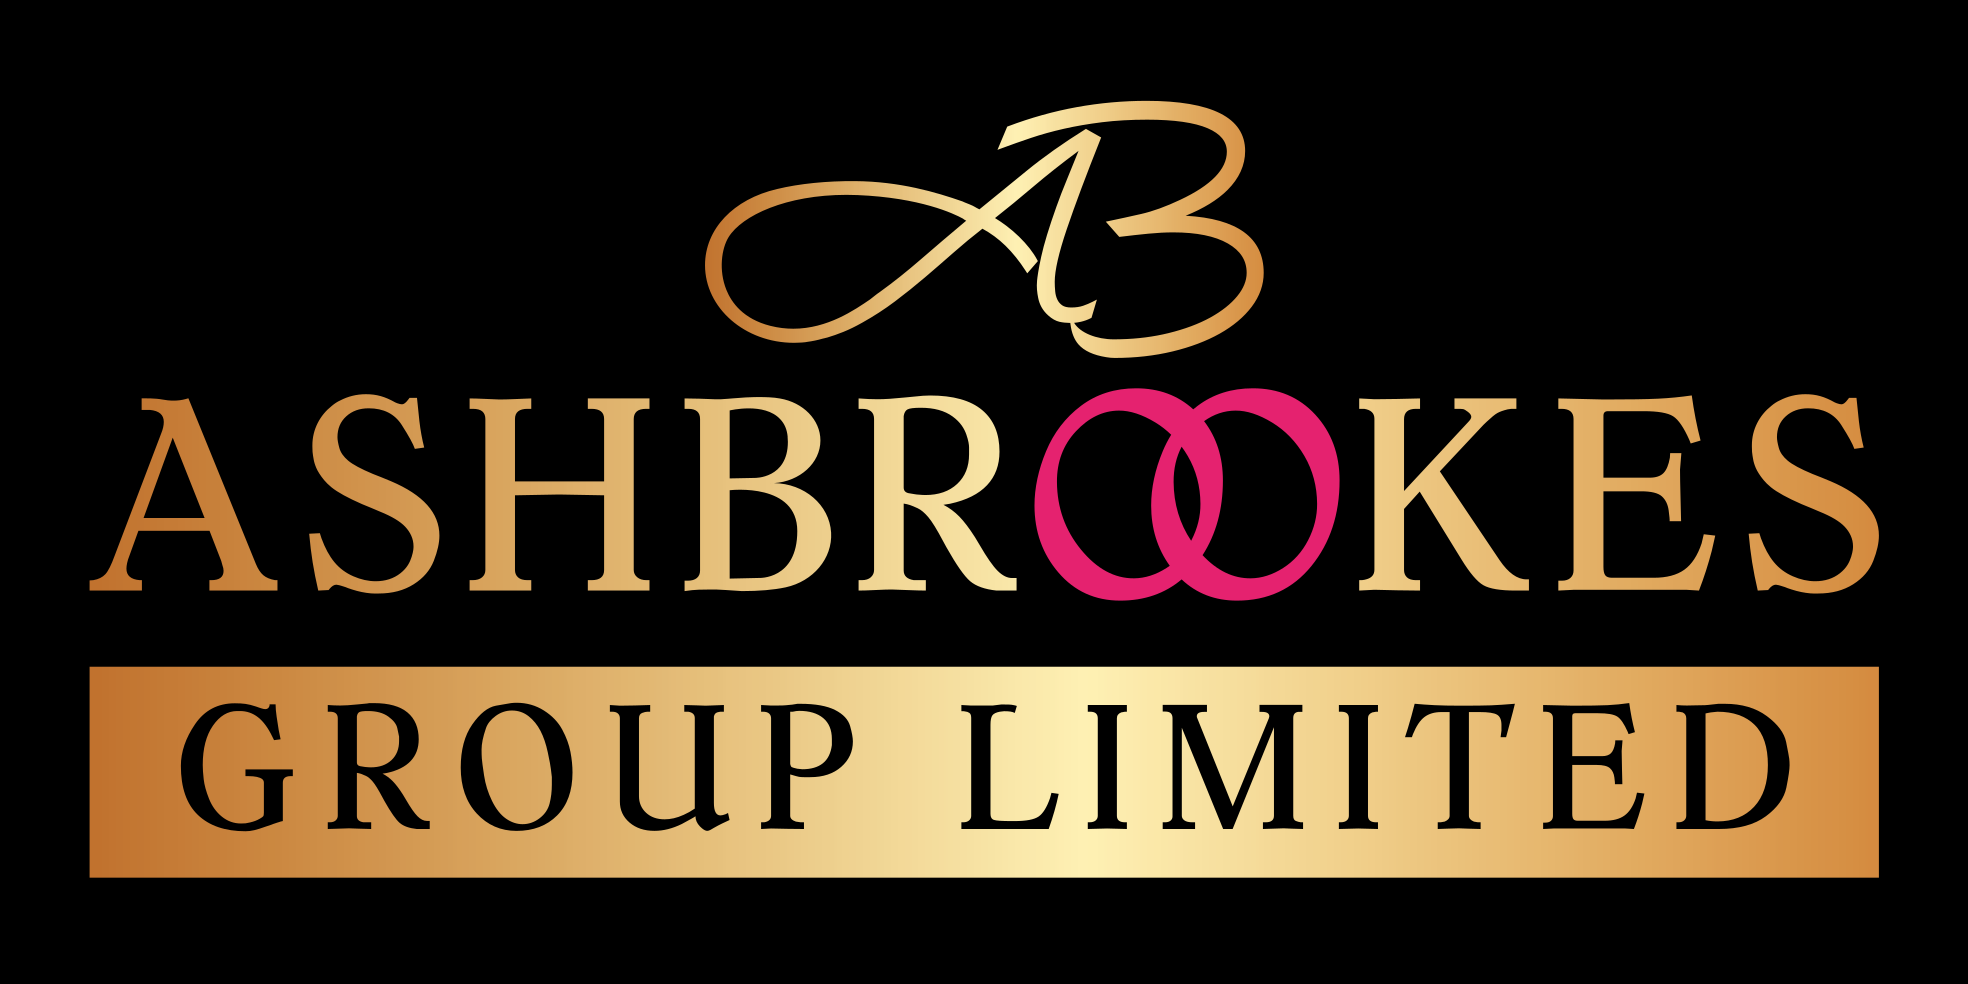 Ashbrookes full logo.